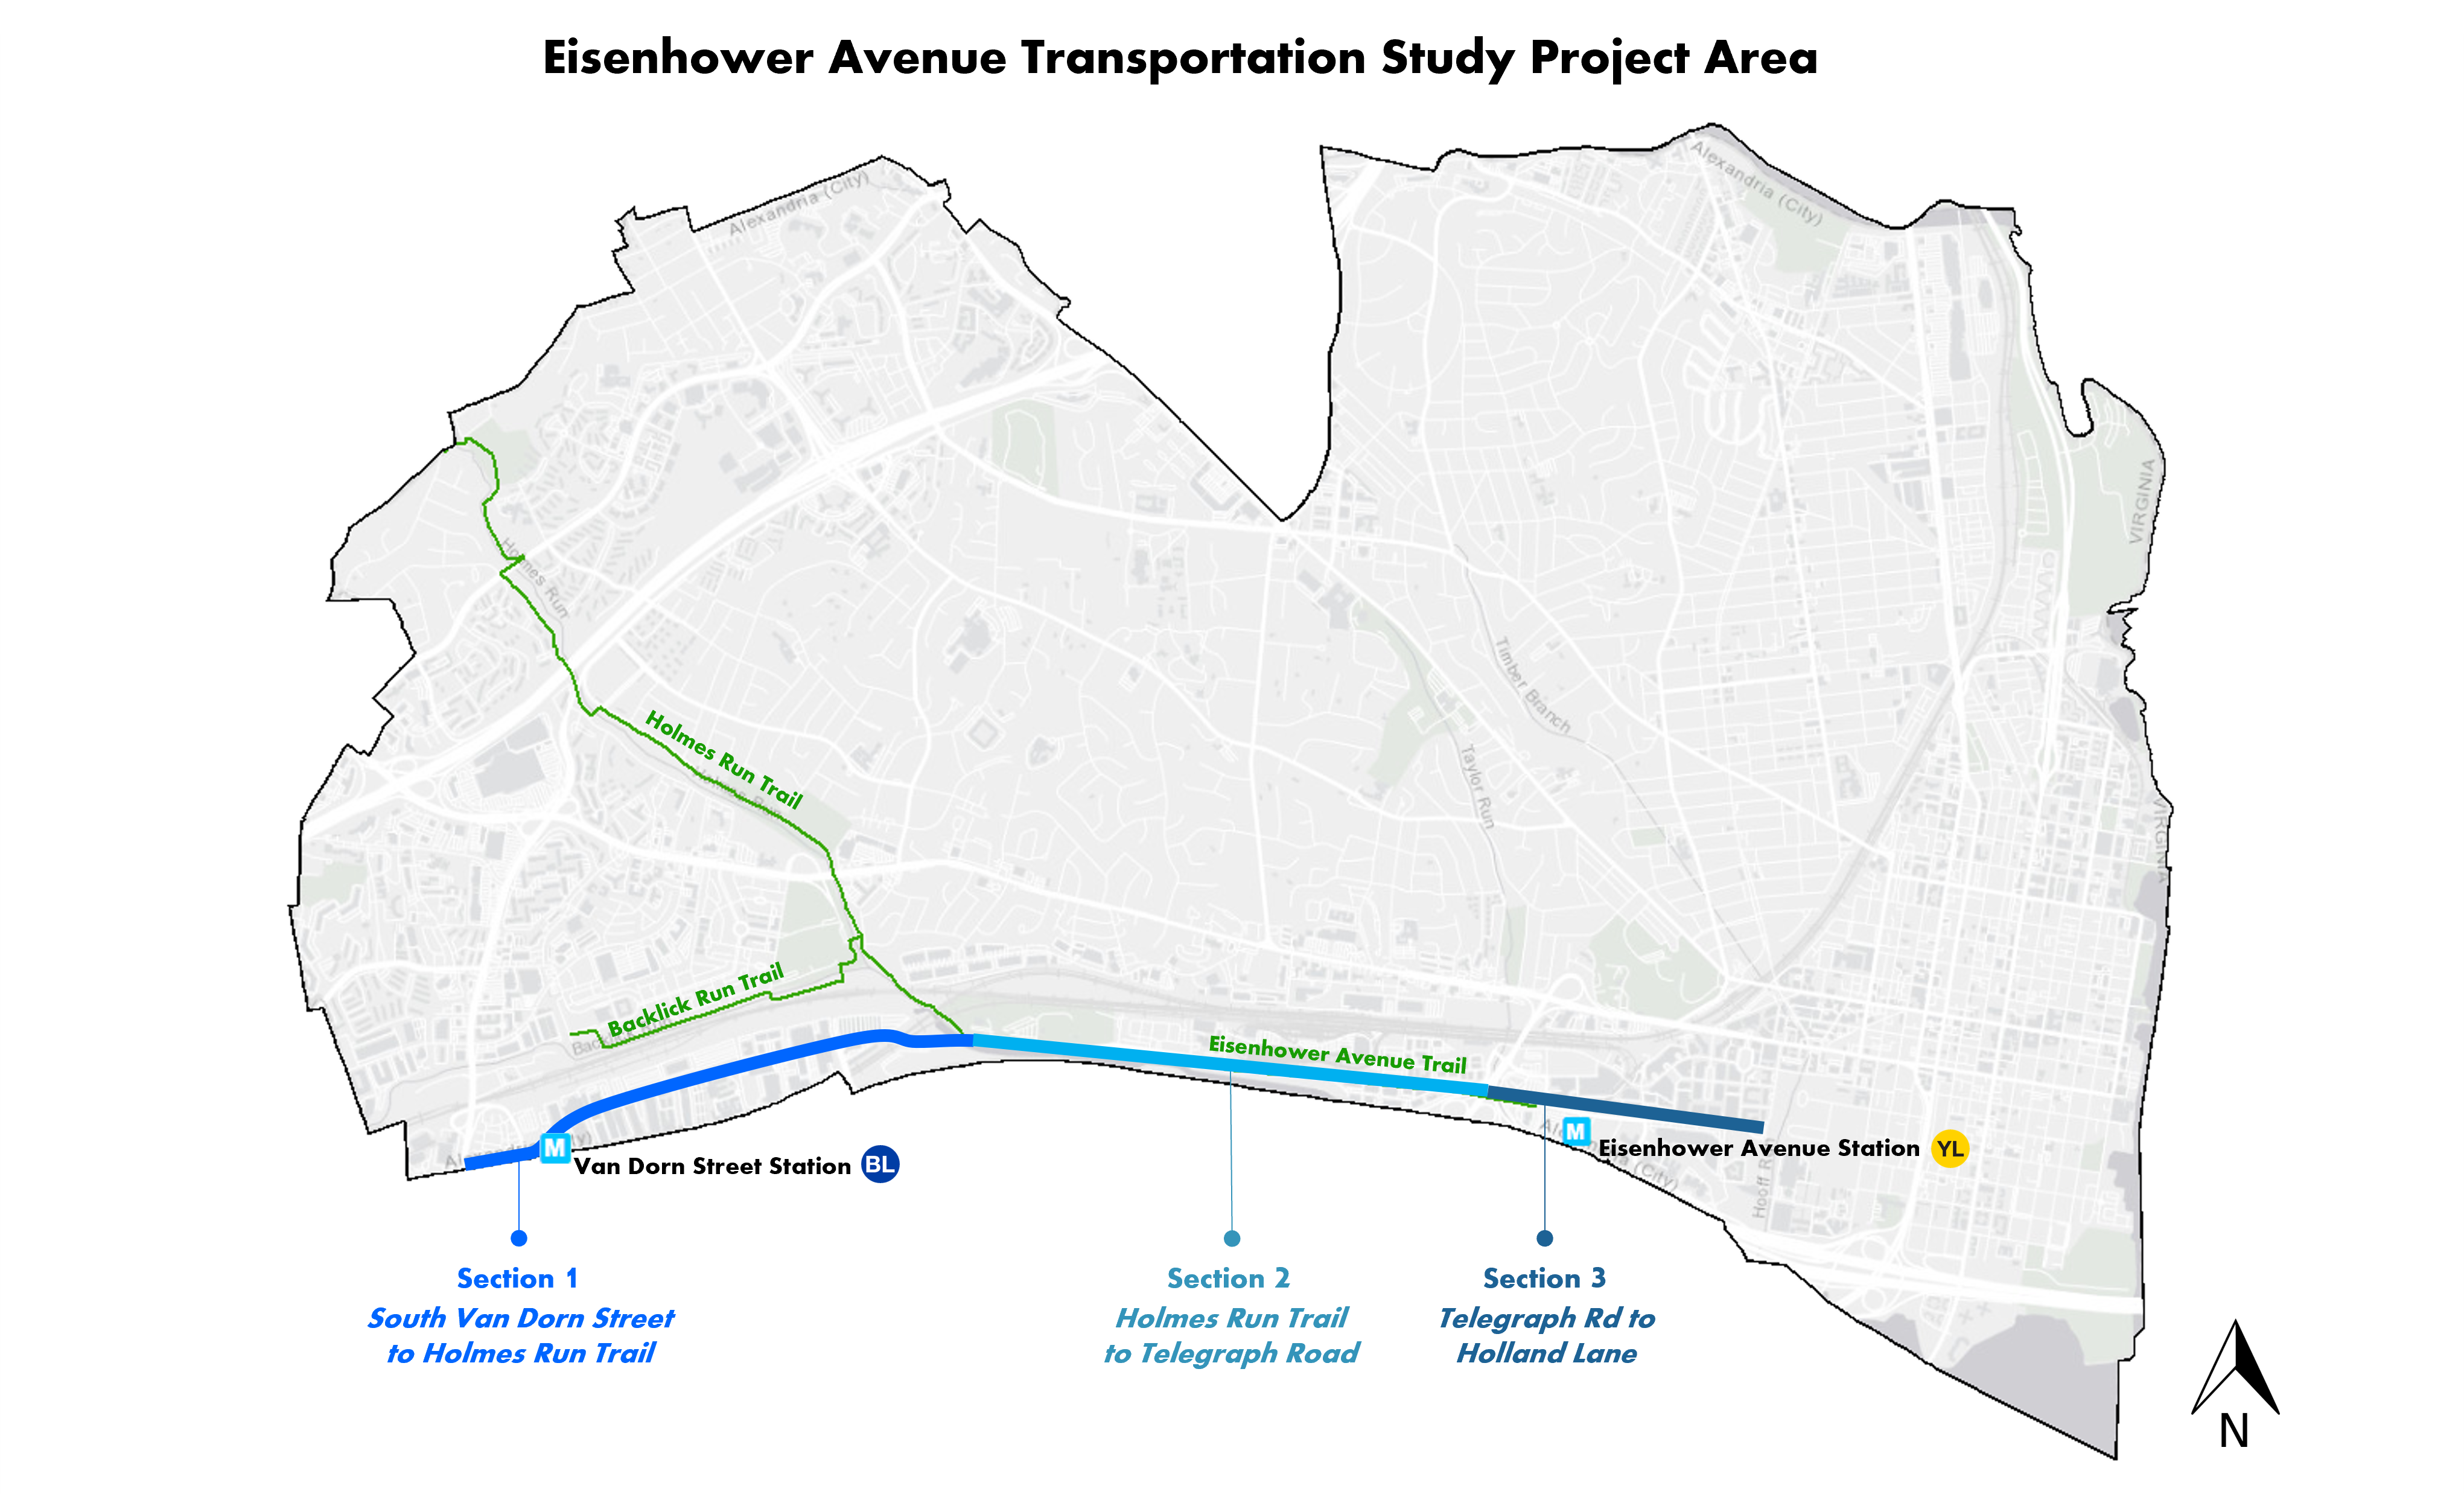 Map of the Eisenhower Avenue Transportation Study Area